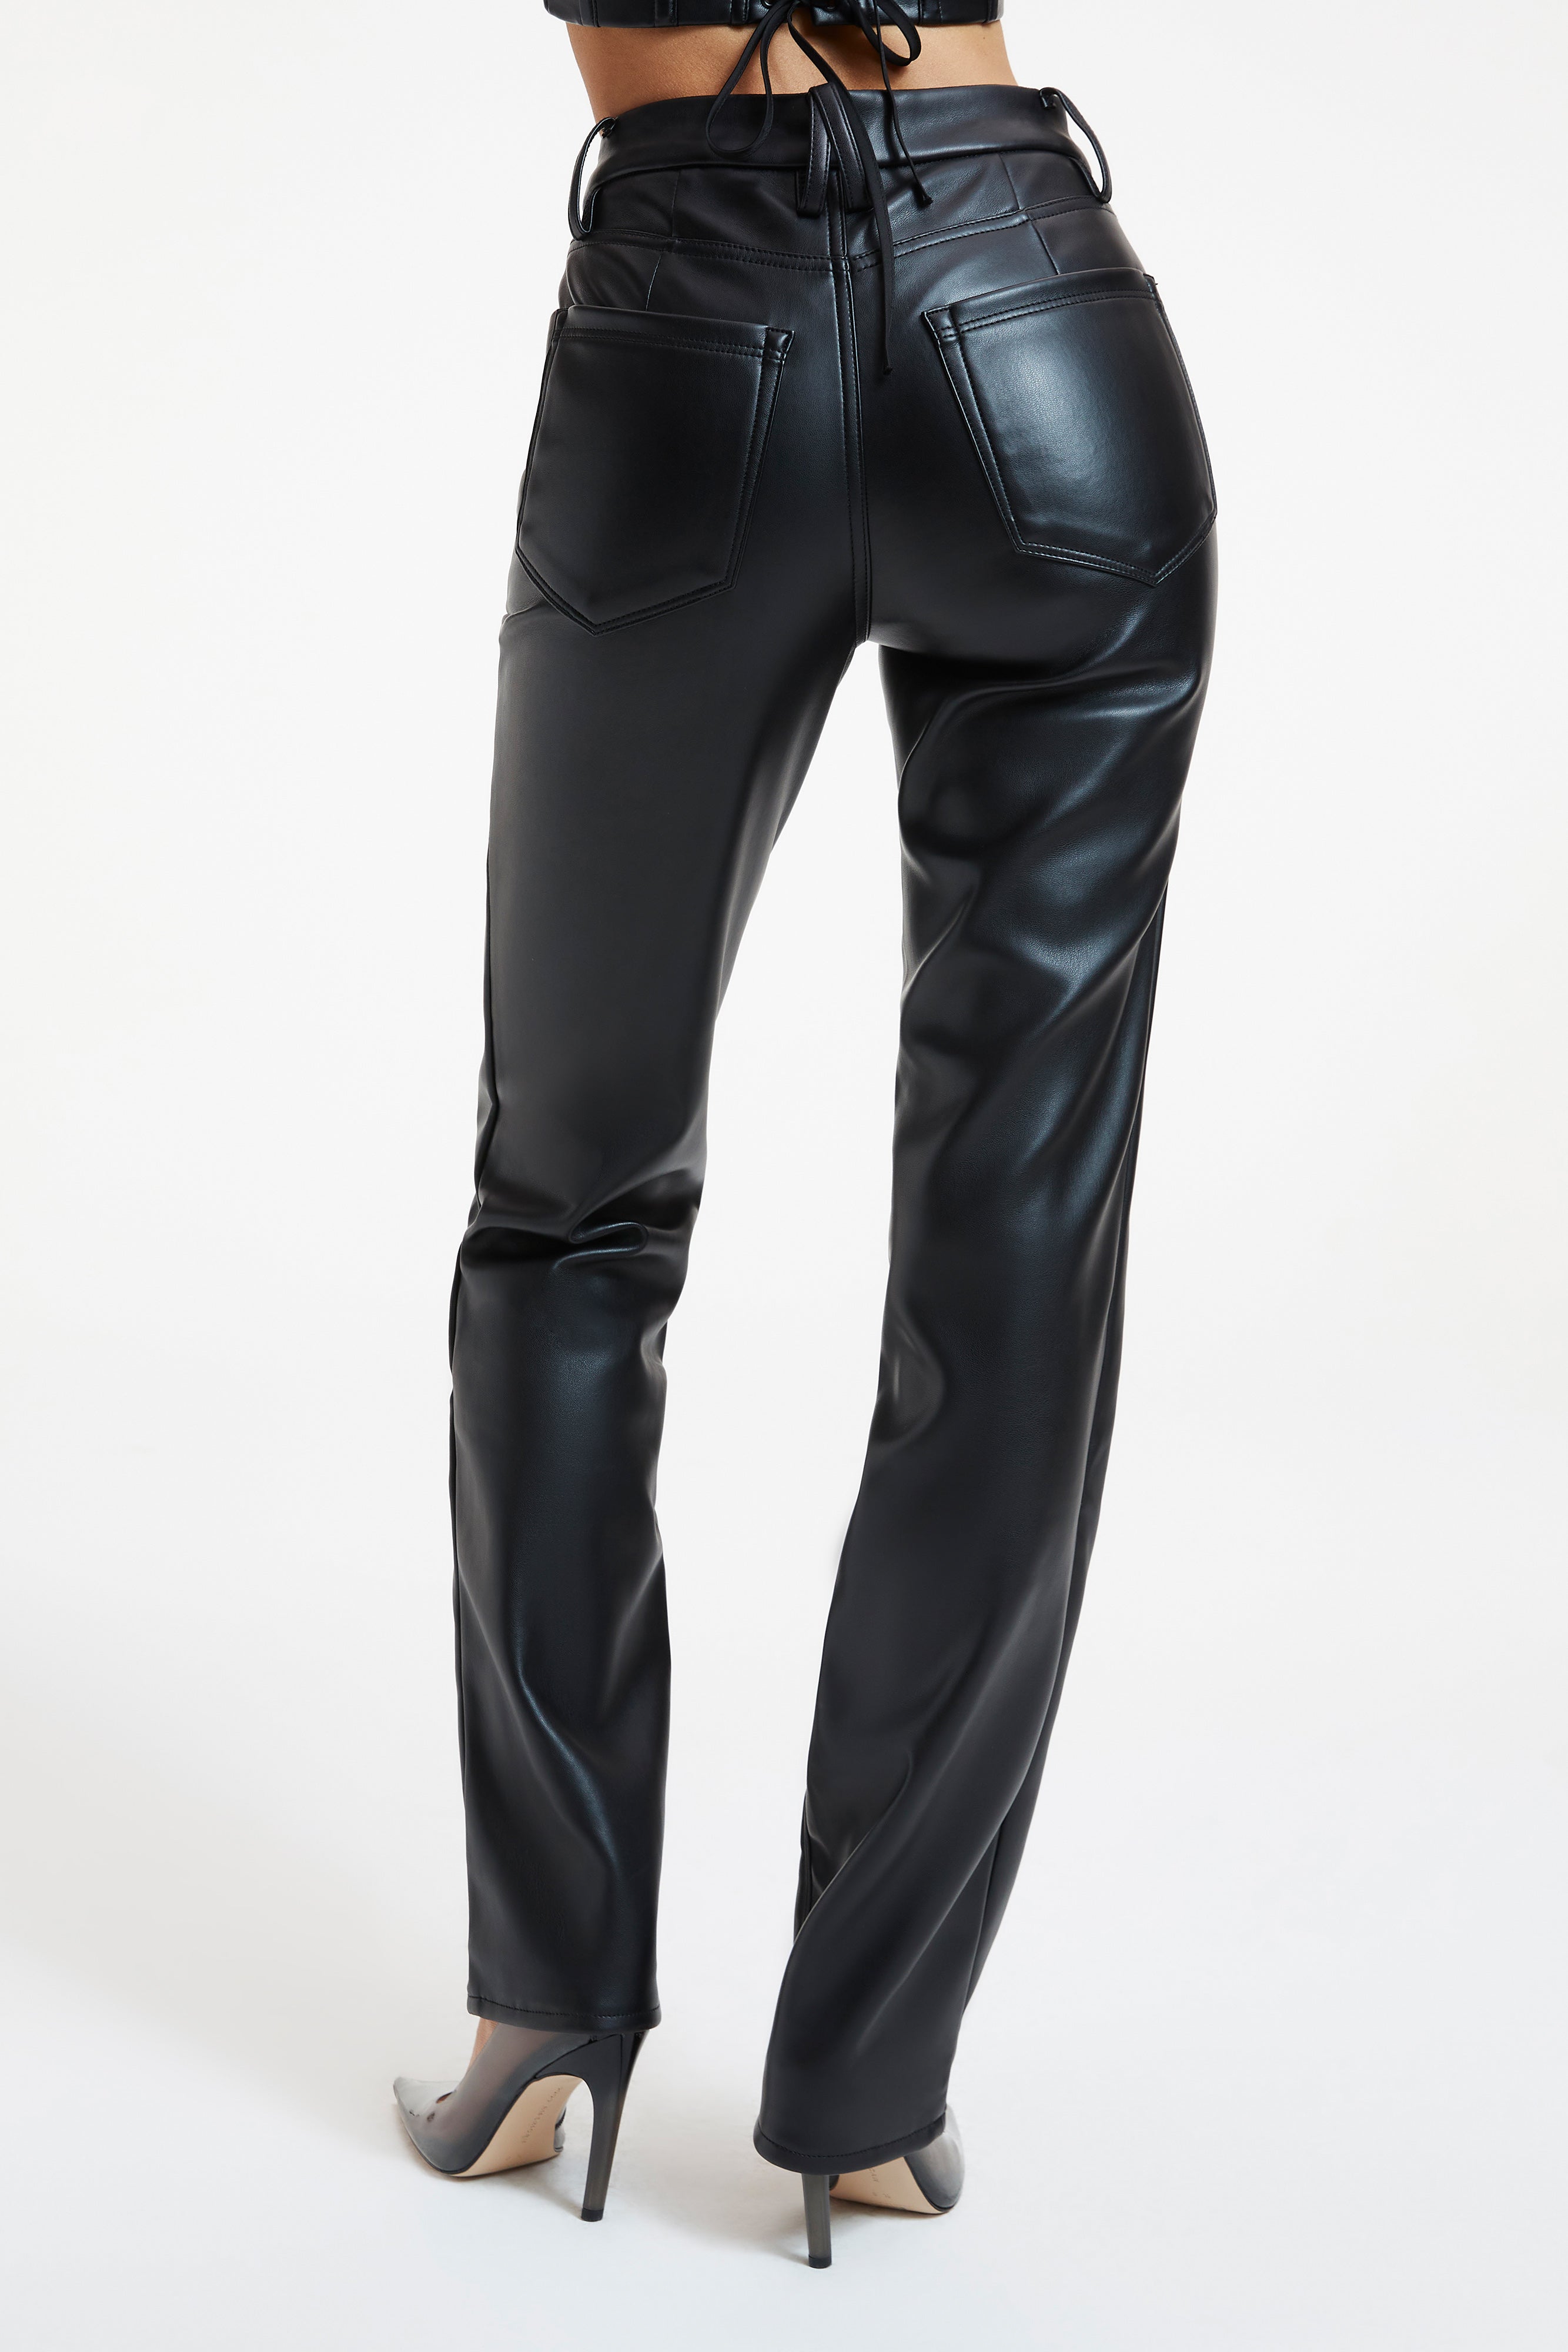 Hyfve Skinny Faux Leather Pant - Women's Pants in Black | Buckle